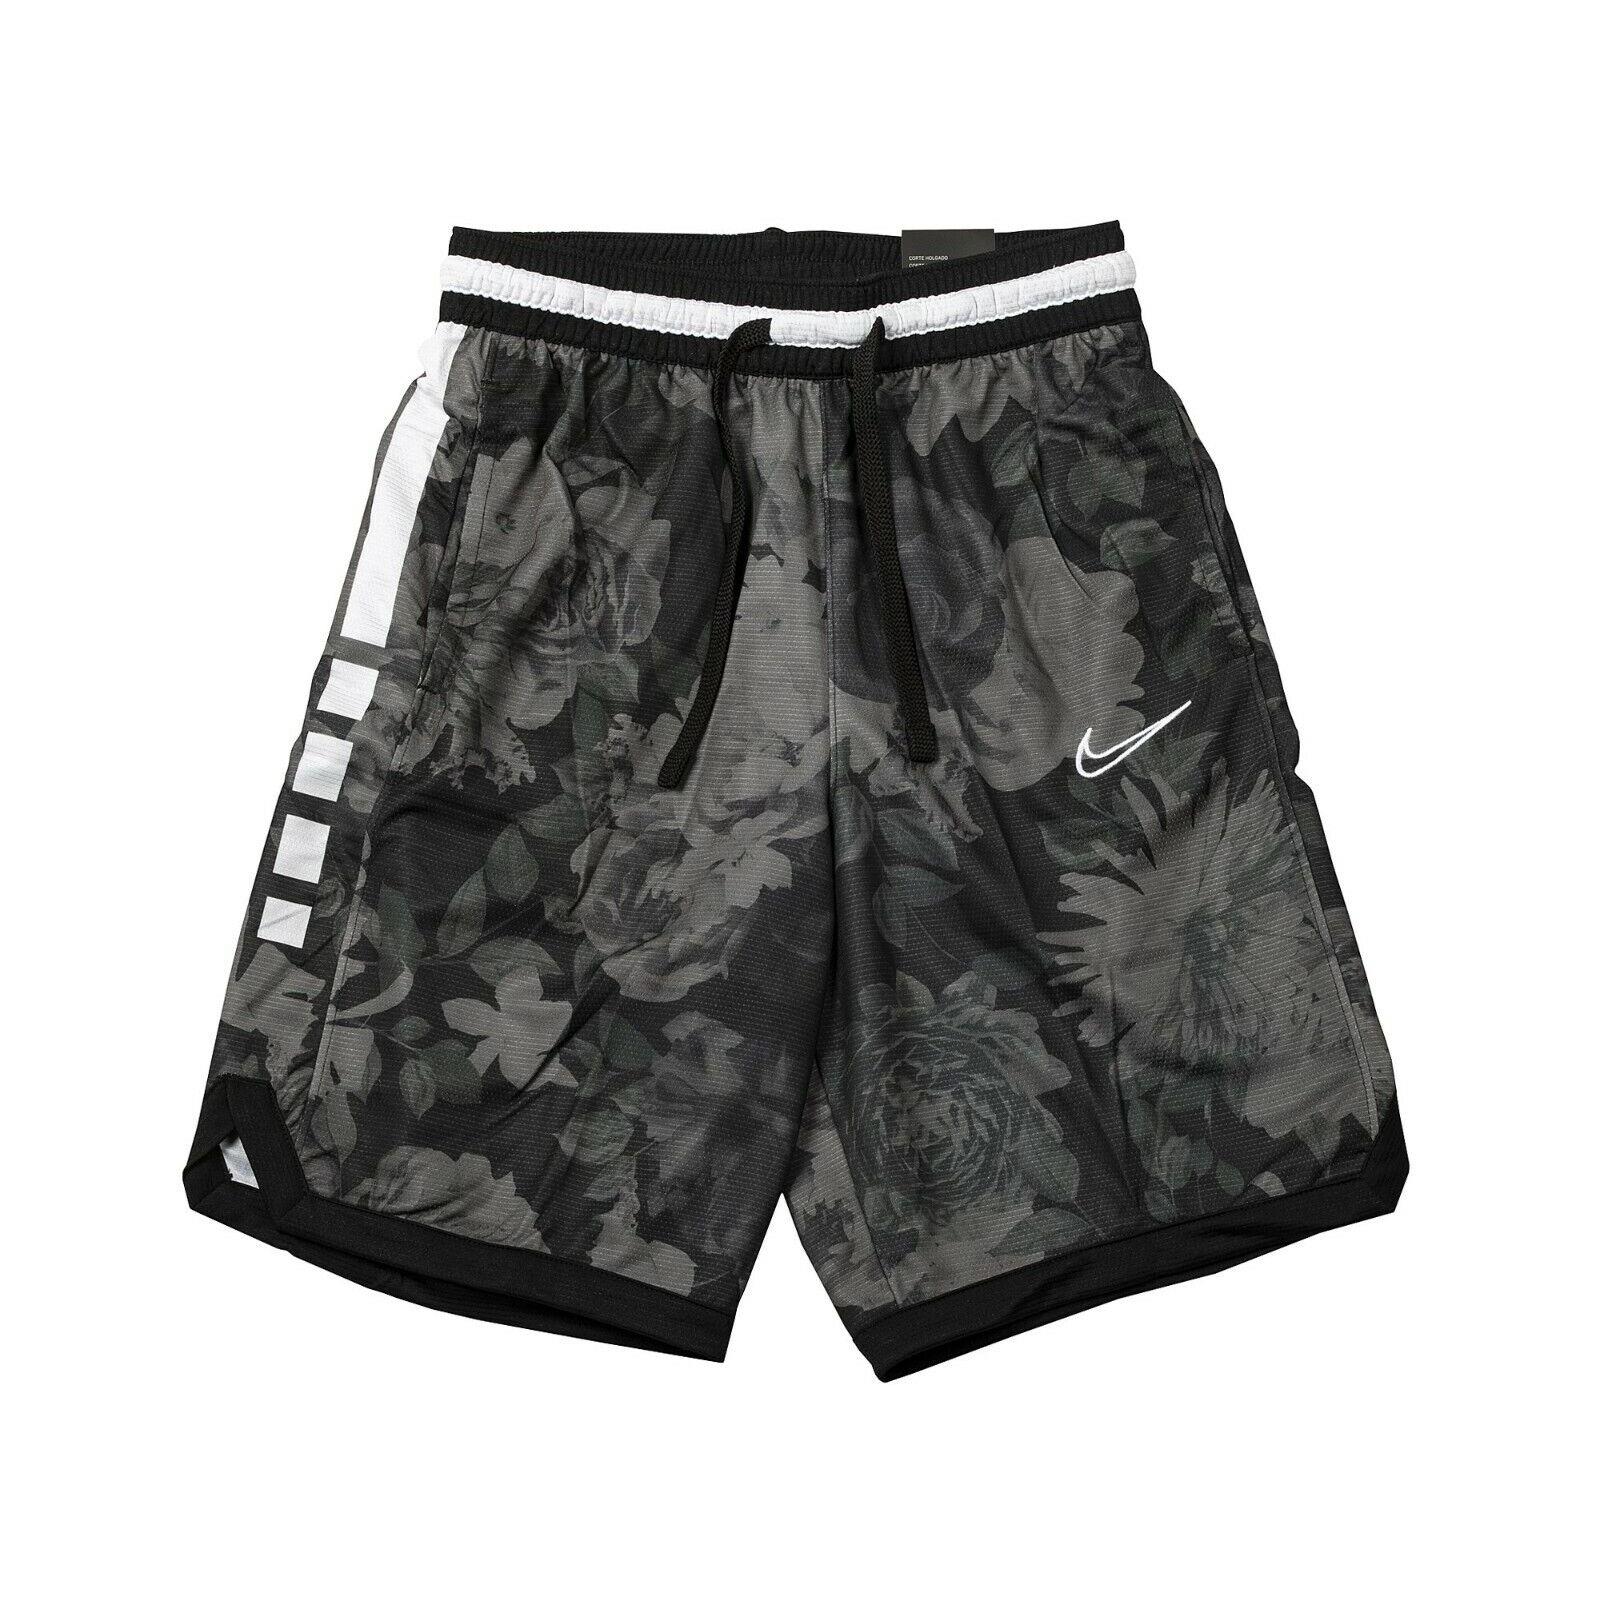 Nike Elite Stripe Basketball Shorts Size S White Black Floral Rare CK6370-011